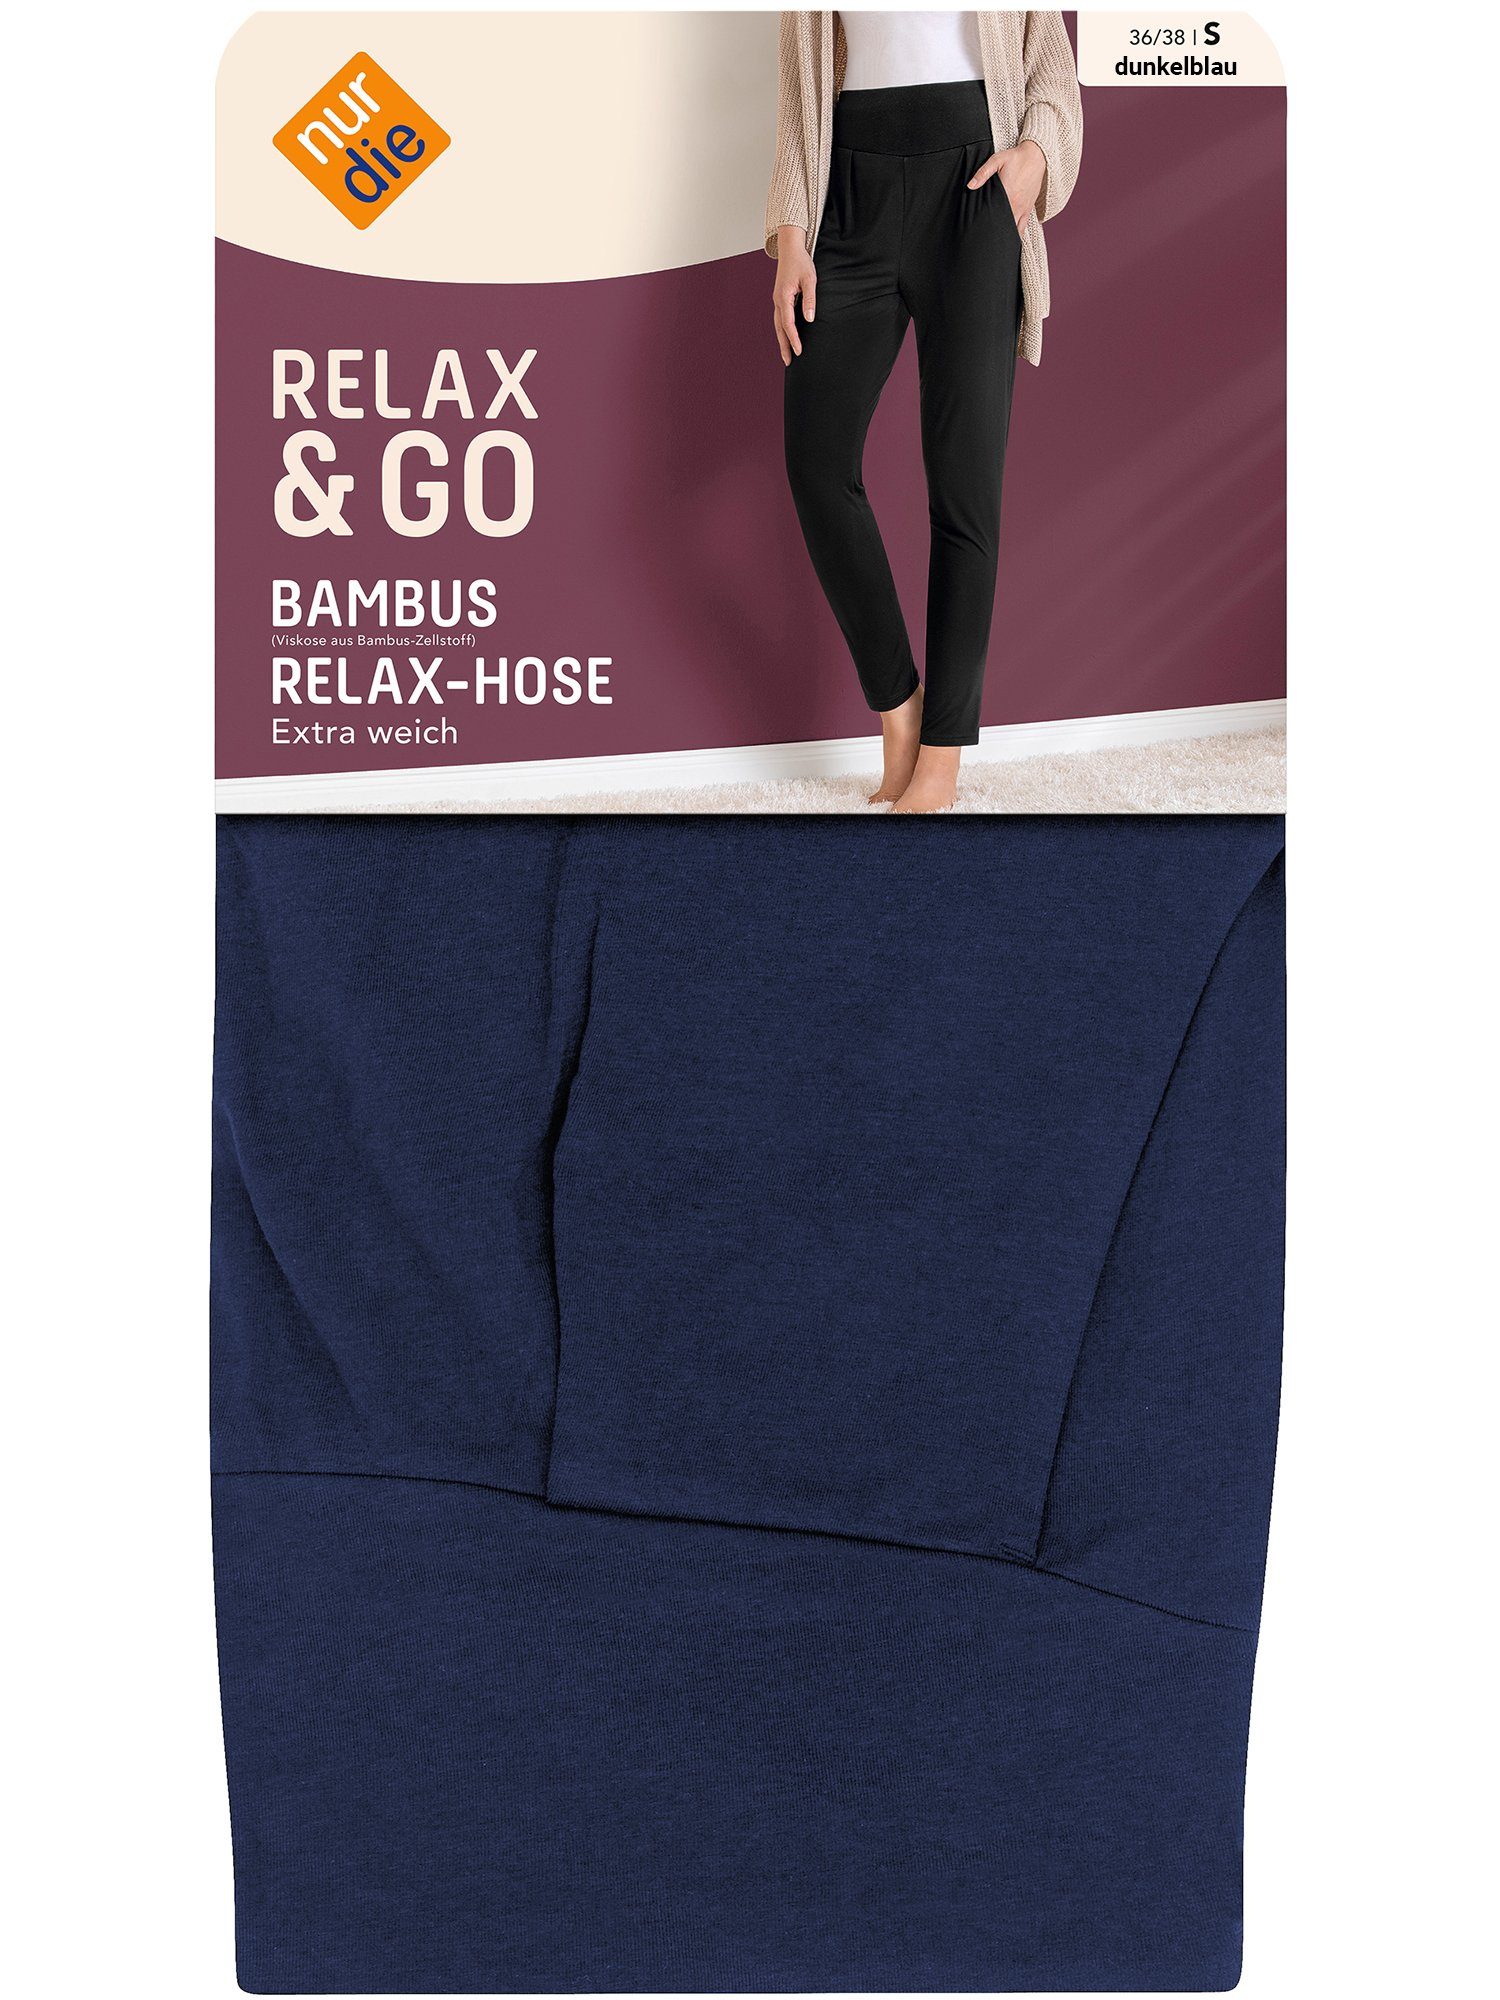 Die Nur Relax Loungehose Go & dunkelblau